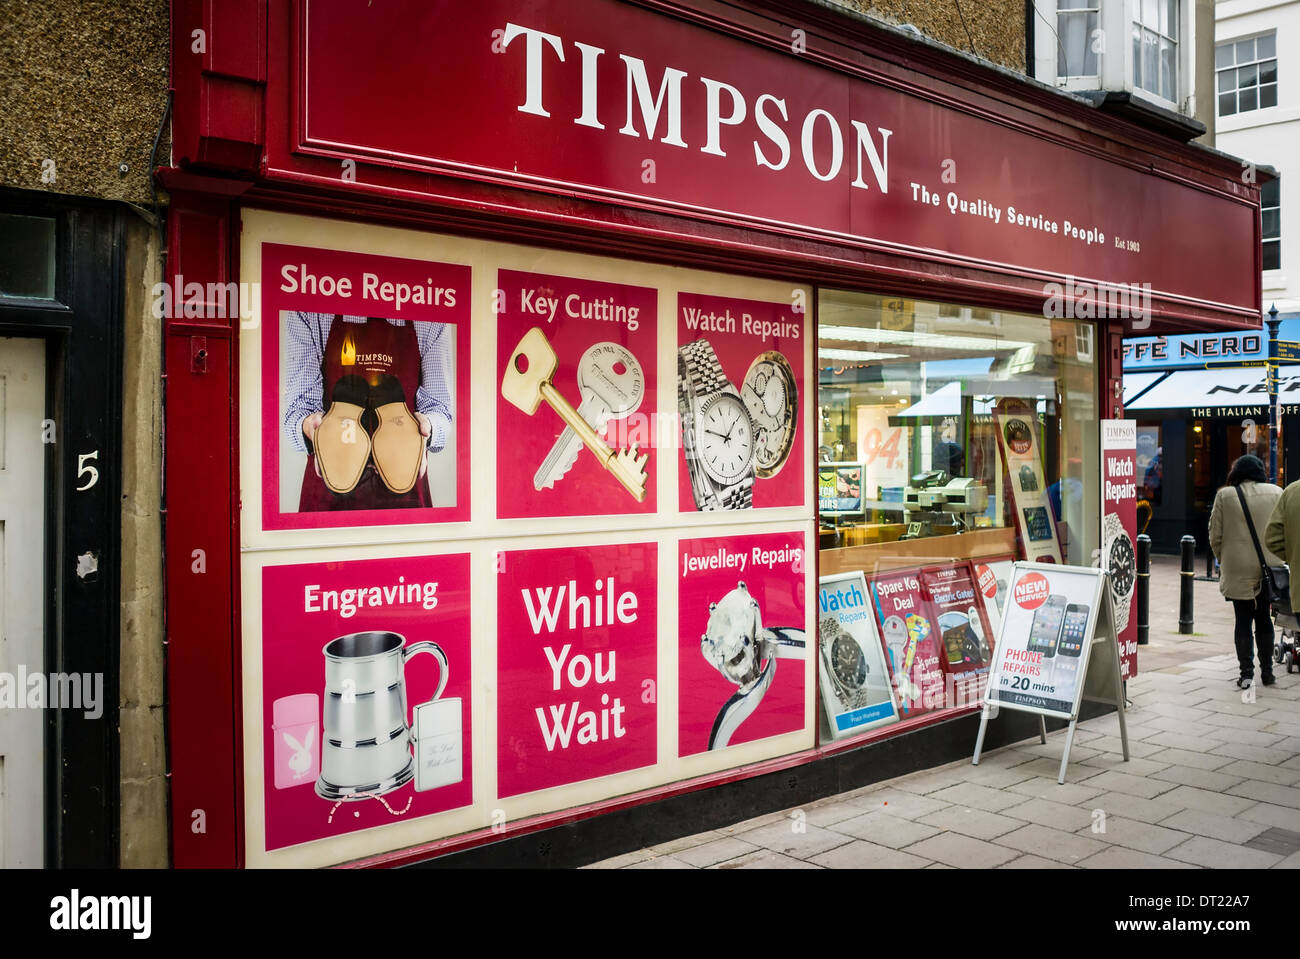 TIMPSON shop in Devizes UK Stock Photo